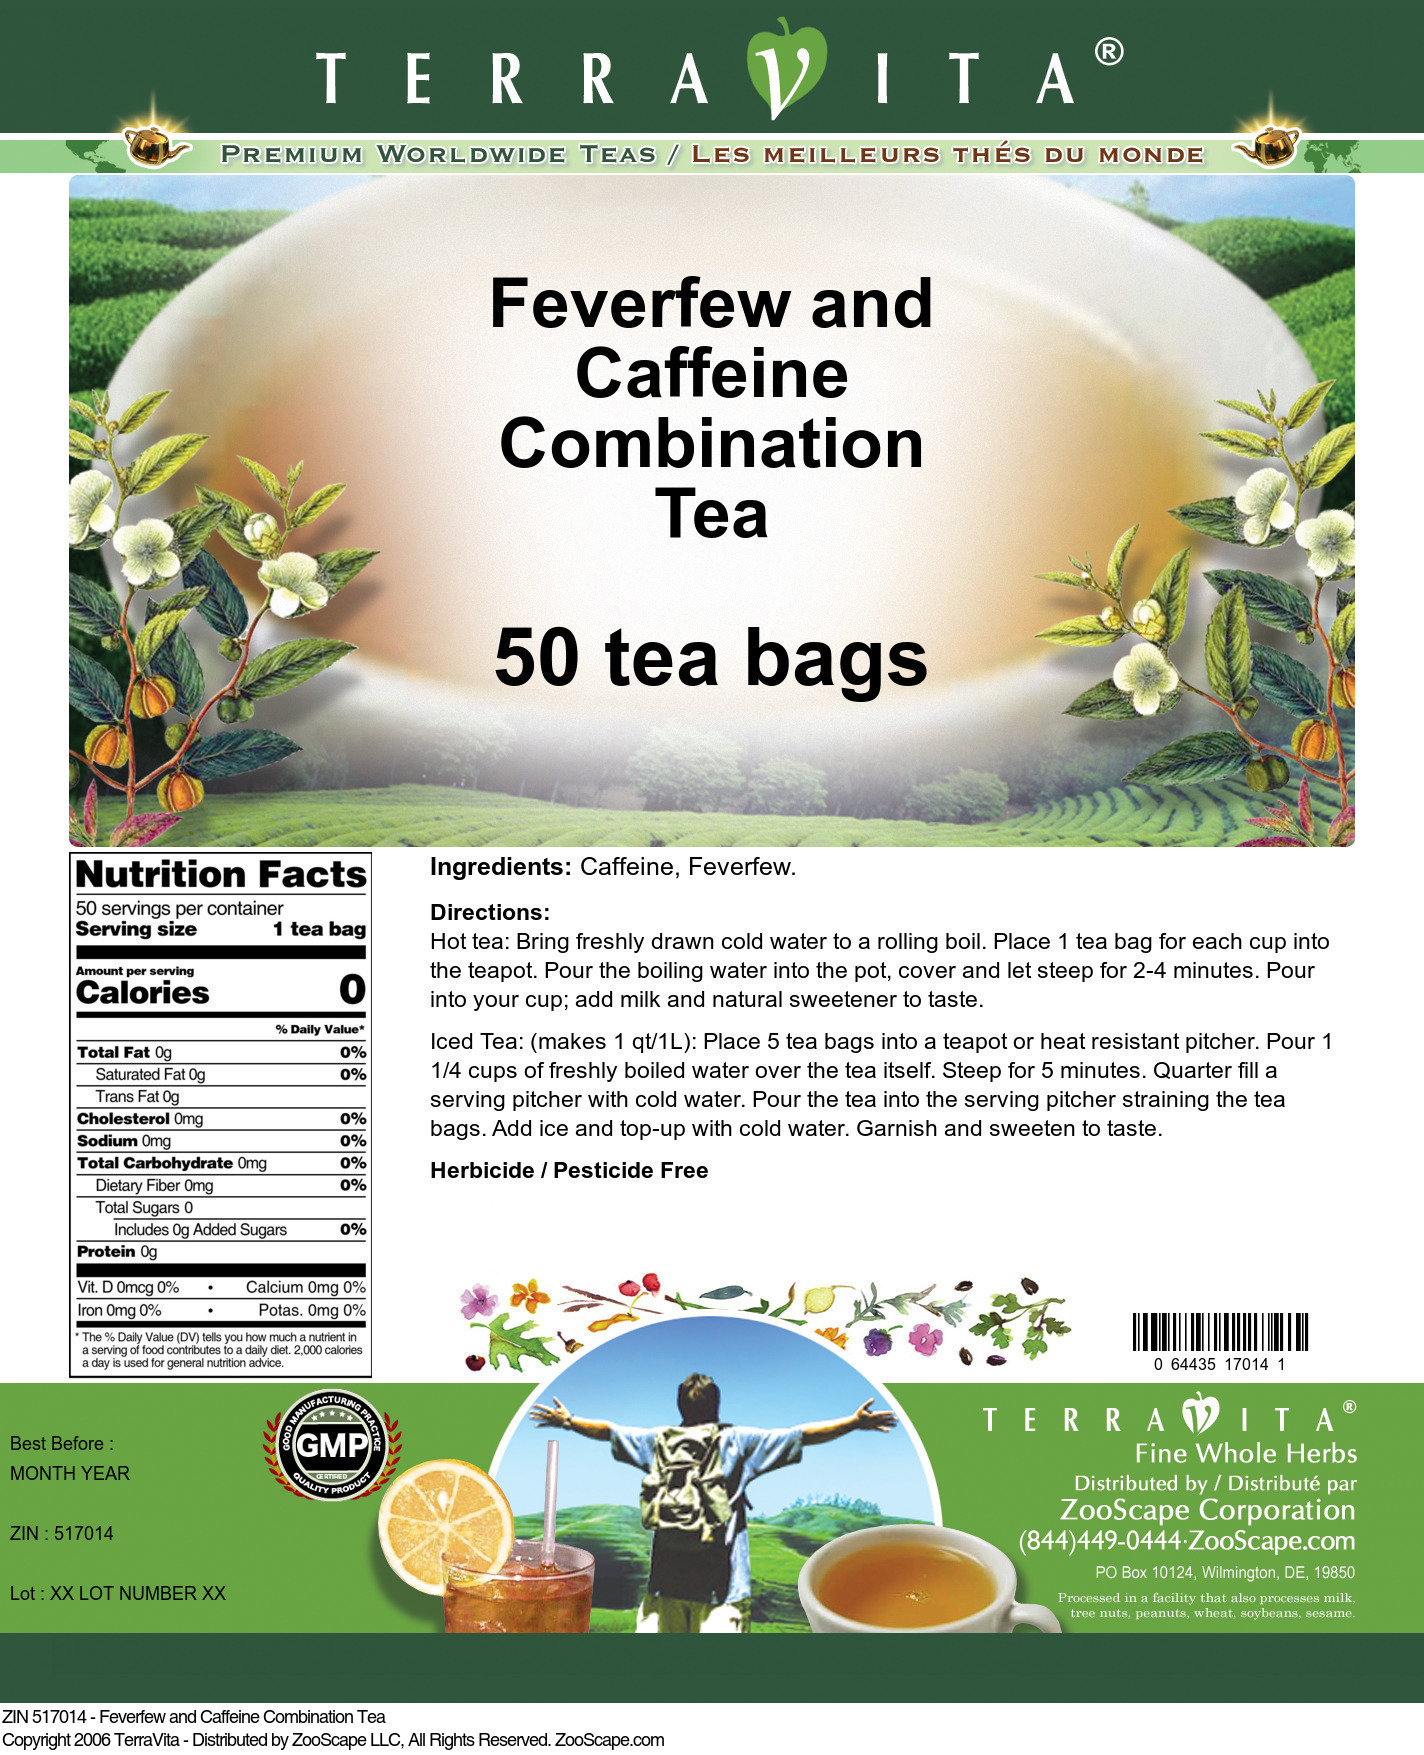 Feverfew and Caffeine Combination Tea - Label